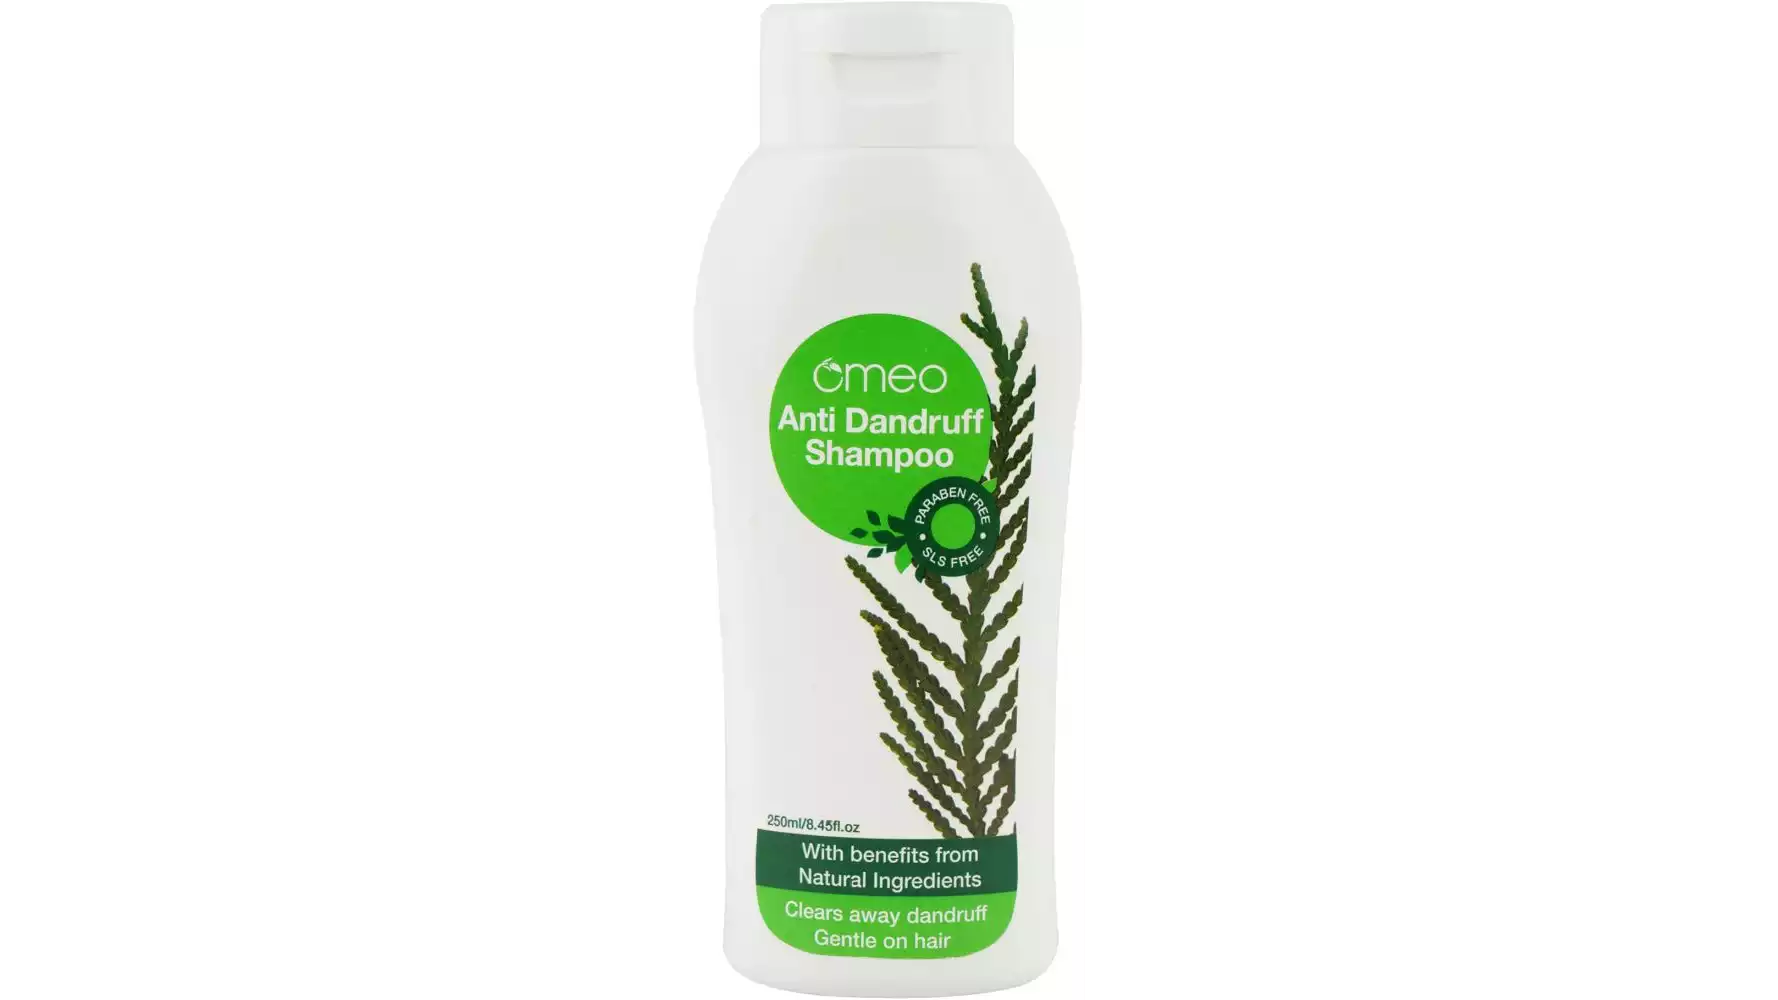 Omeo Anti Dandruff Shampoo (250ml)